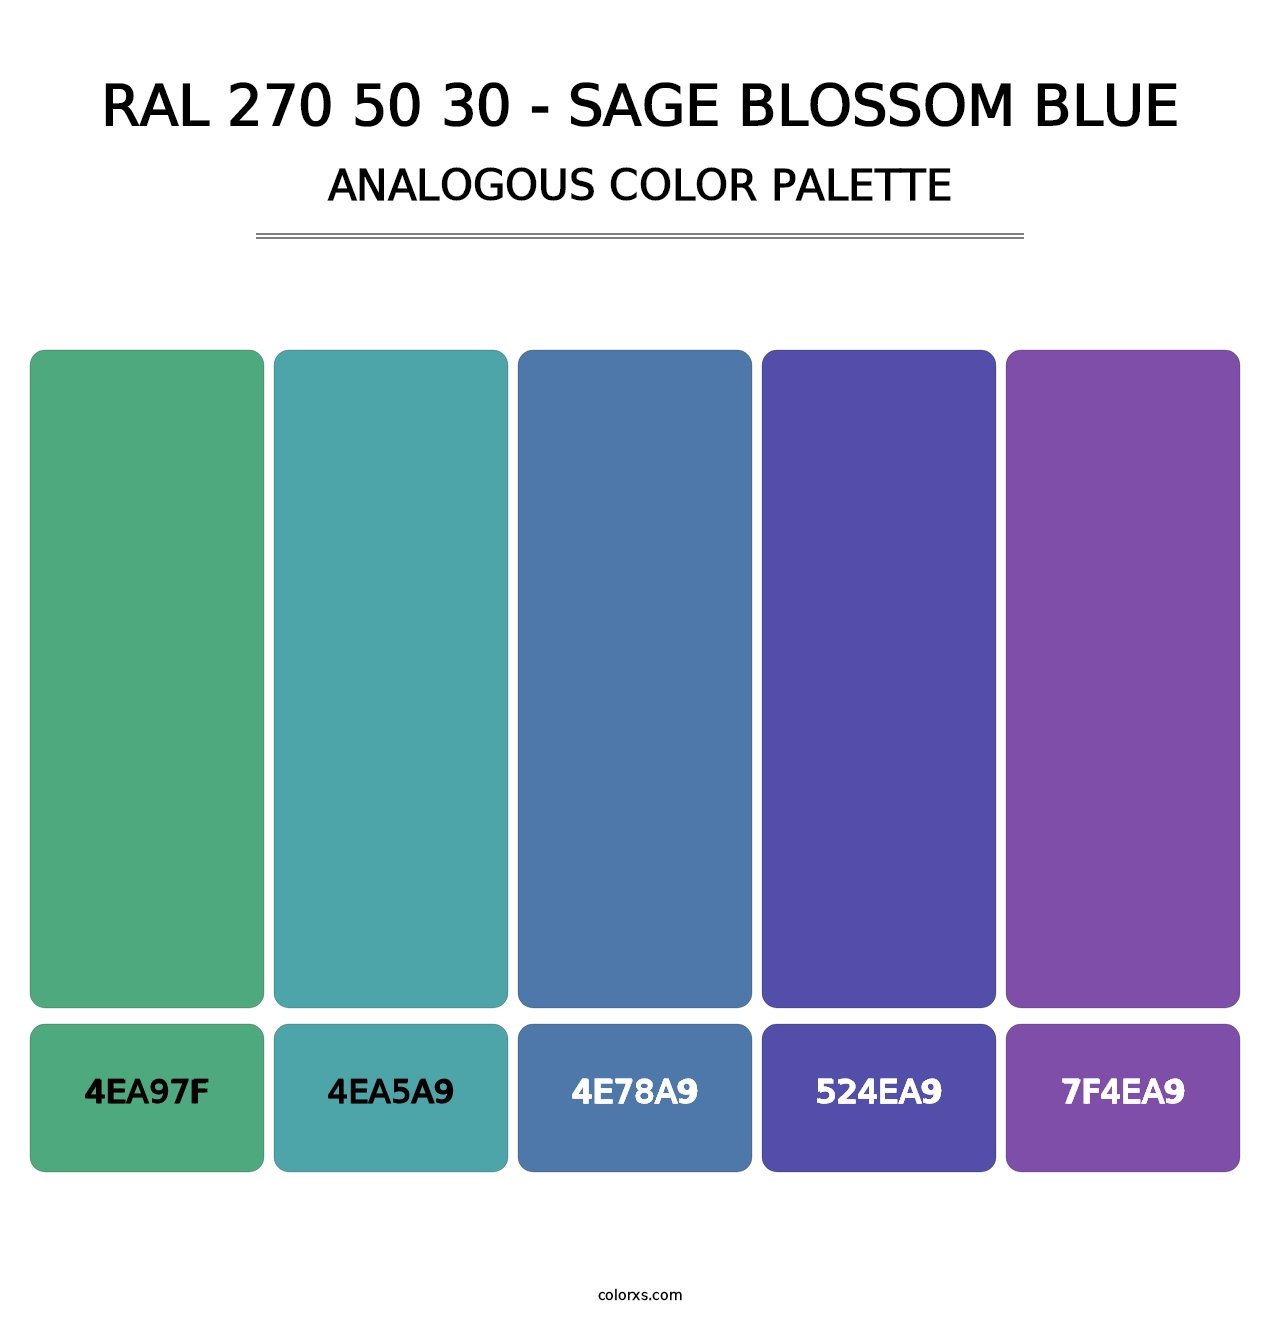 RAL 270 50 30 - Sage Blossom Blue - Analogous Color Palette